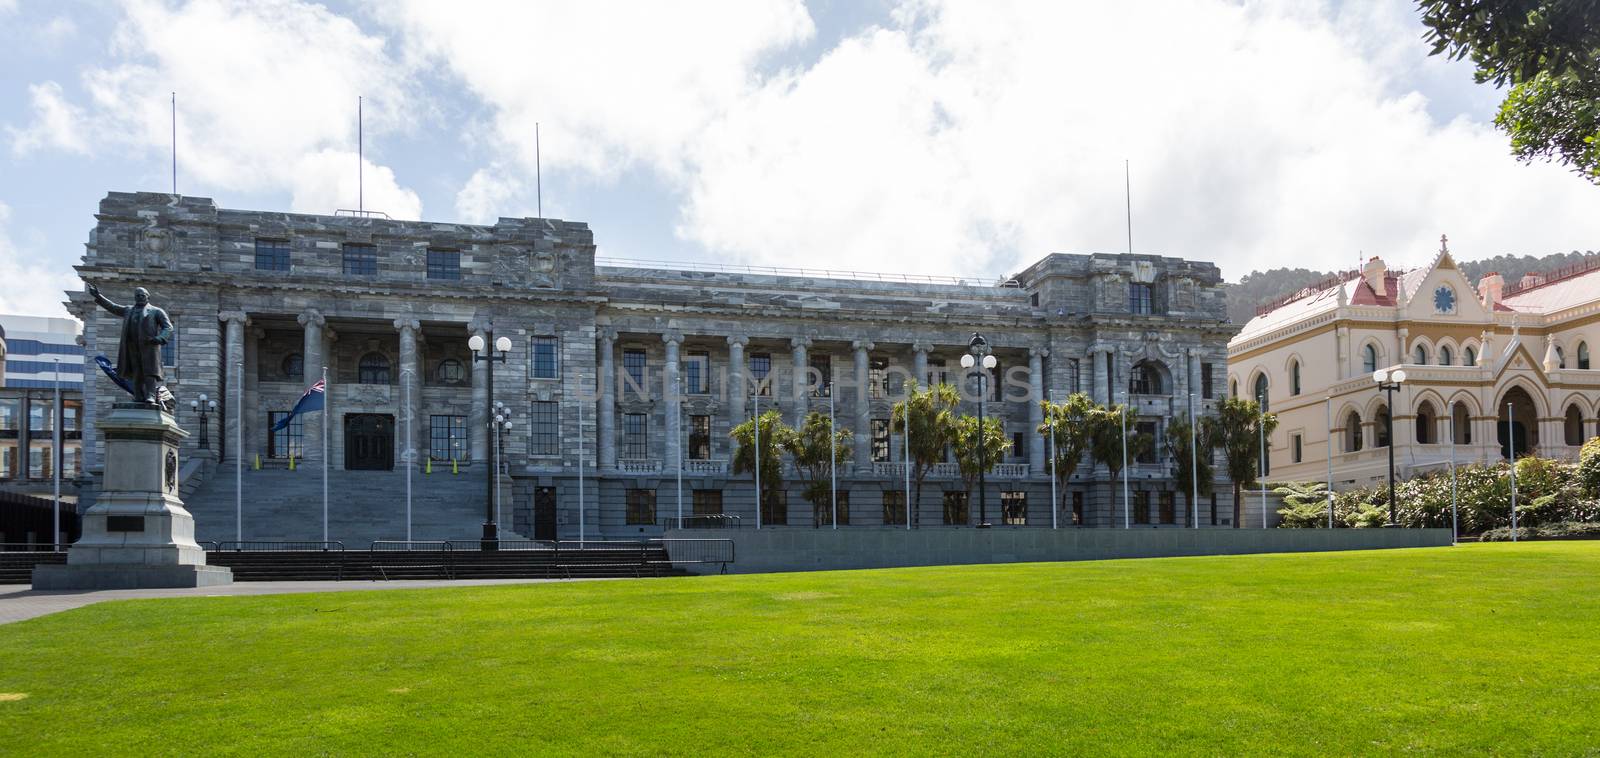 Wellington Parliament buildings NZ by steheap